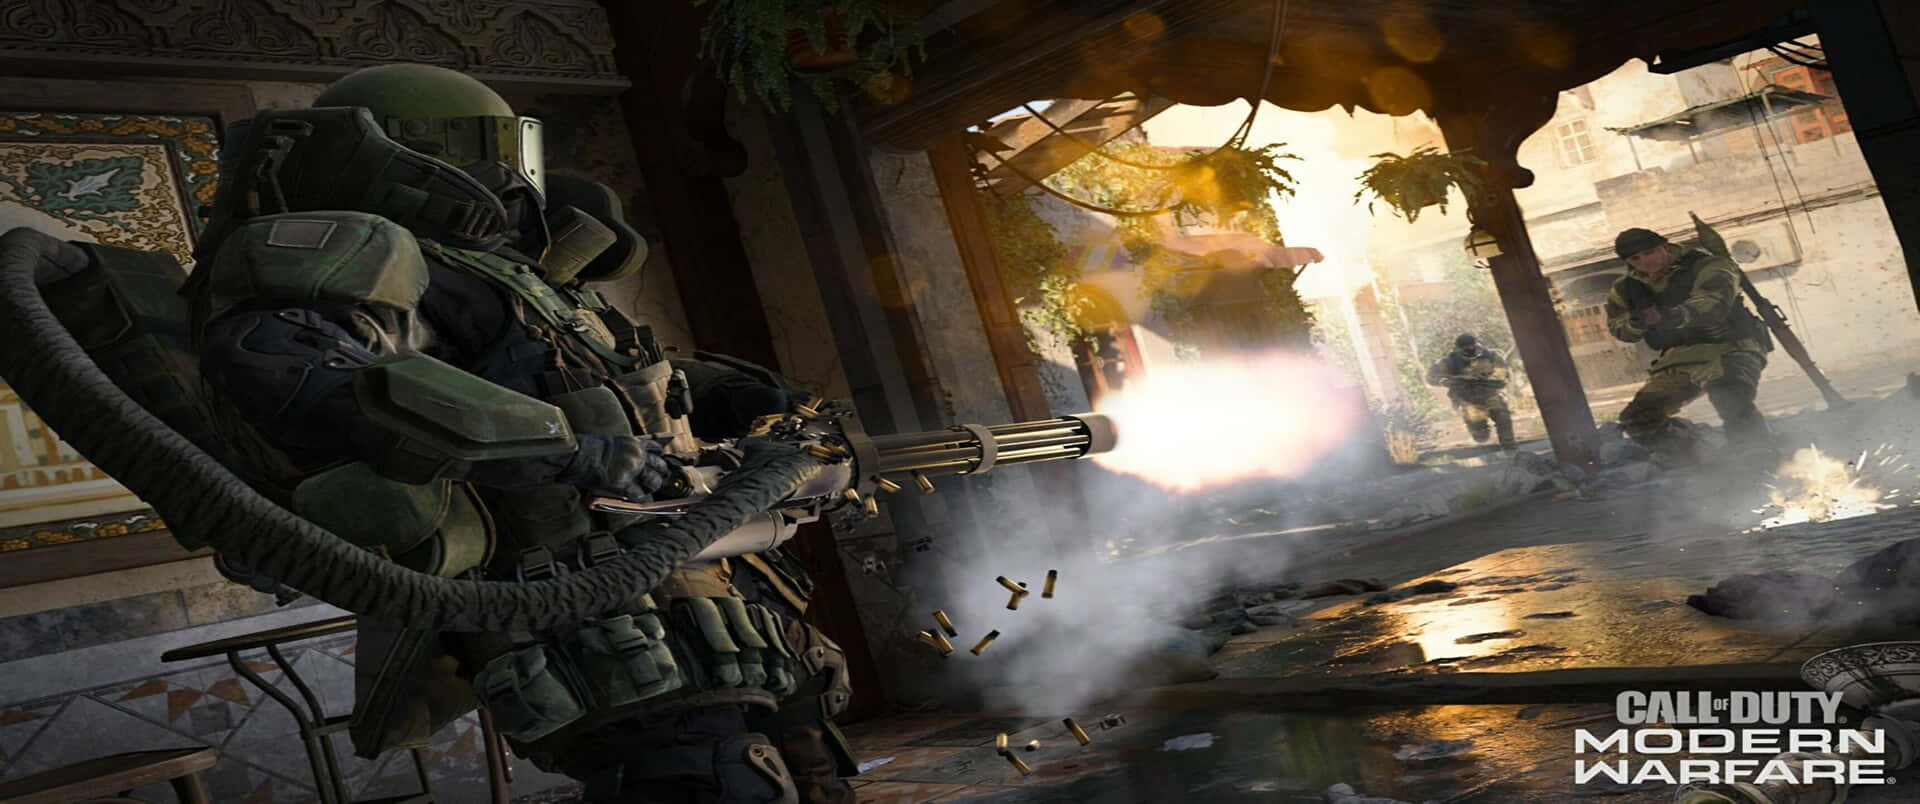 Fire Spray Machine 3440x1440p Call Of Duty Modern Warfare Background